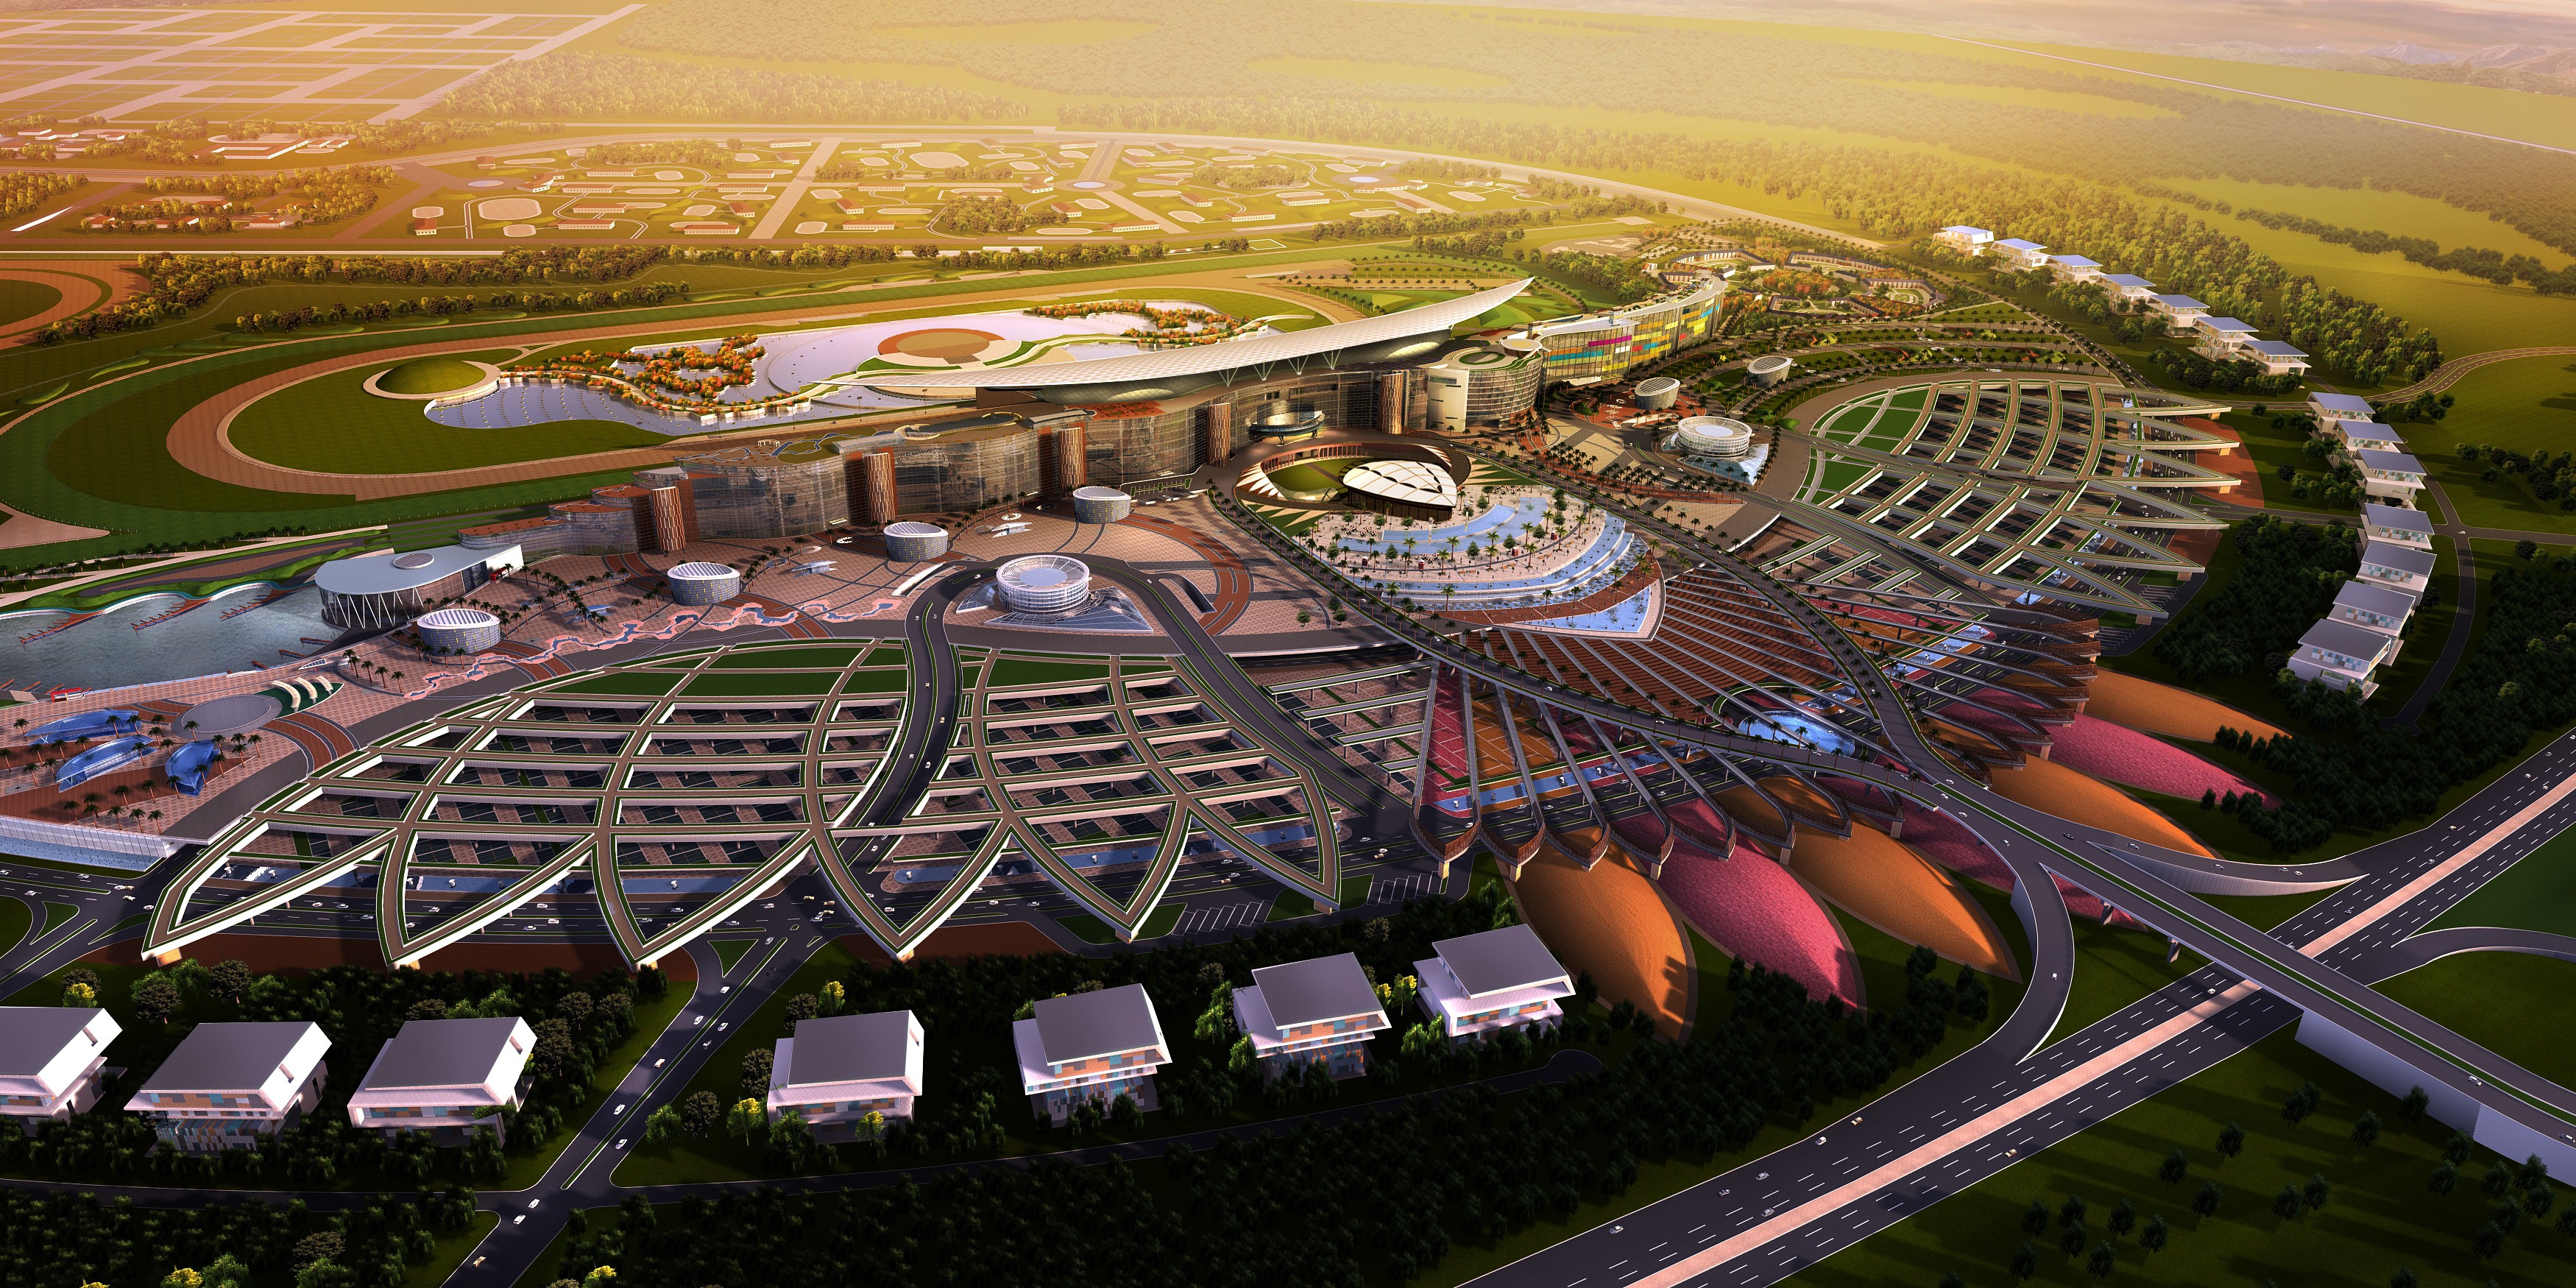 The Meydan Racecourse using Zaun Fencing